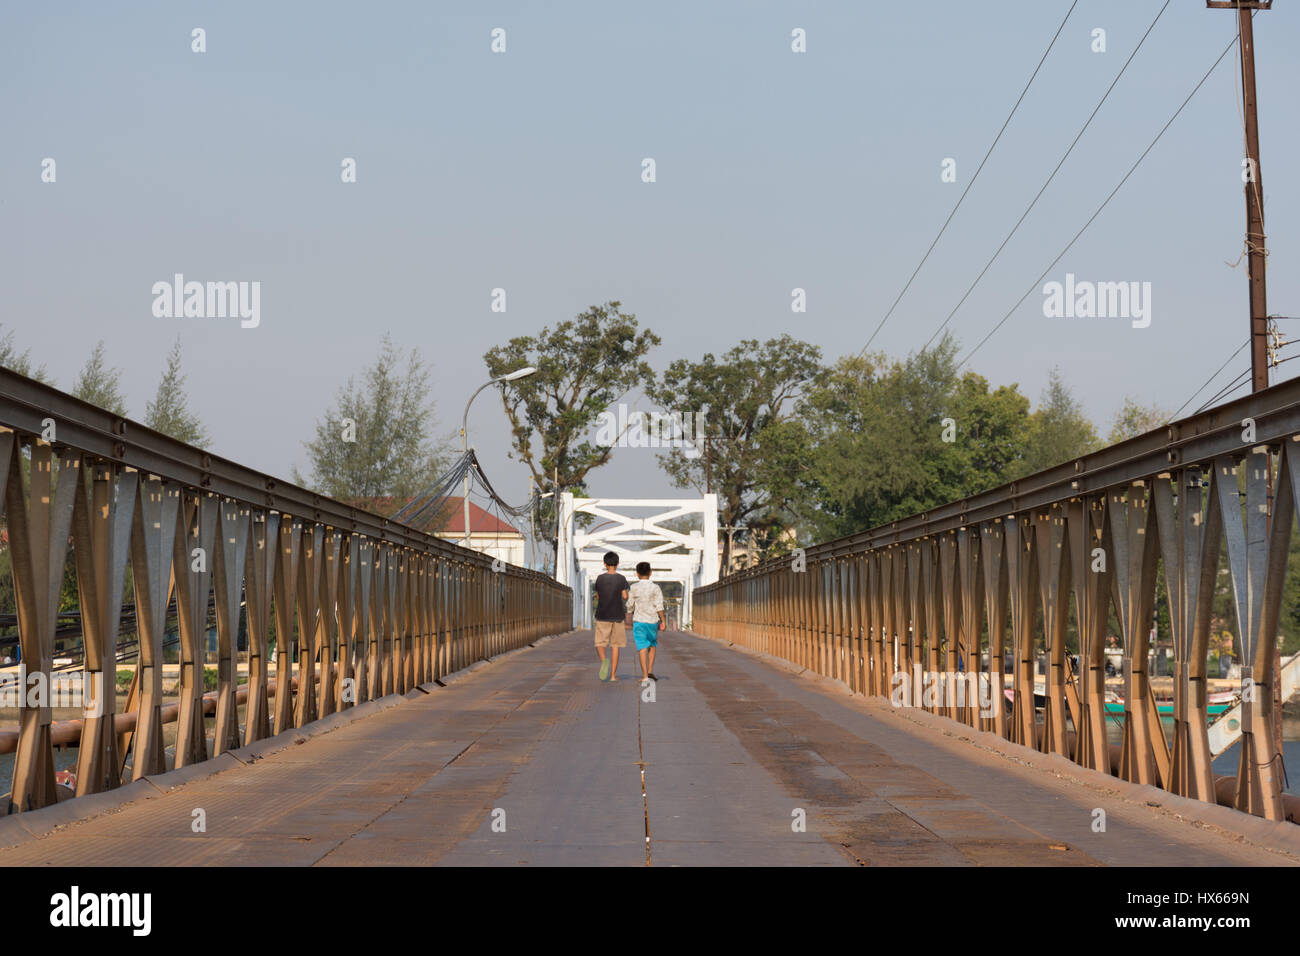 the backs of two children walking away across a metal river crossing bridge in Cambodia. Stock Photo